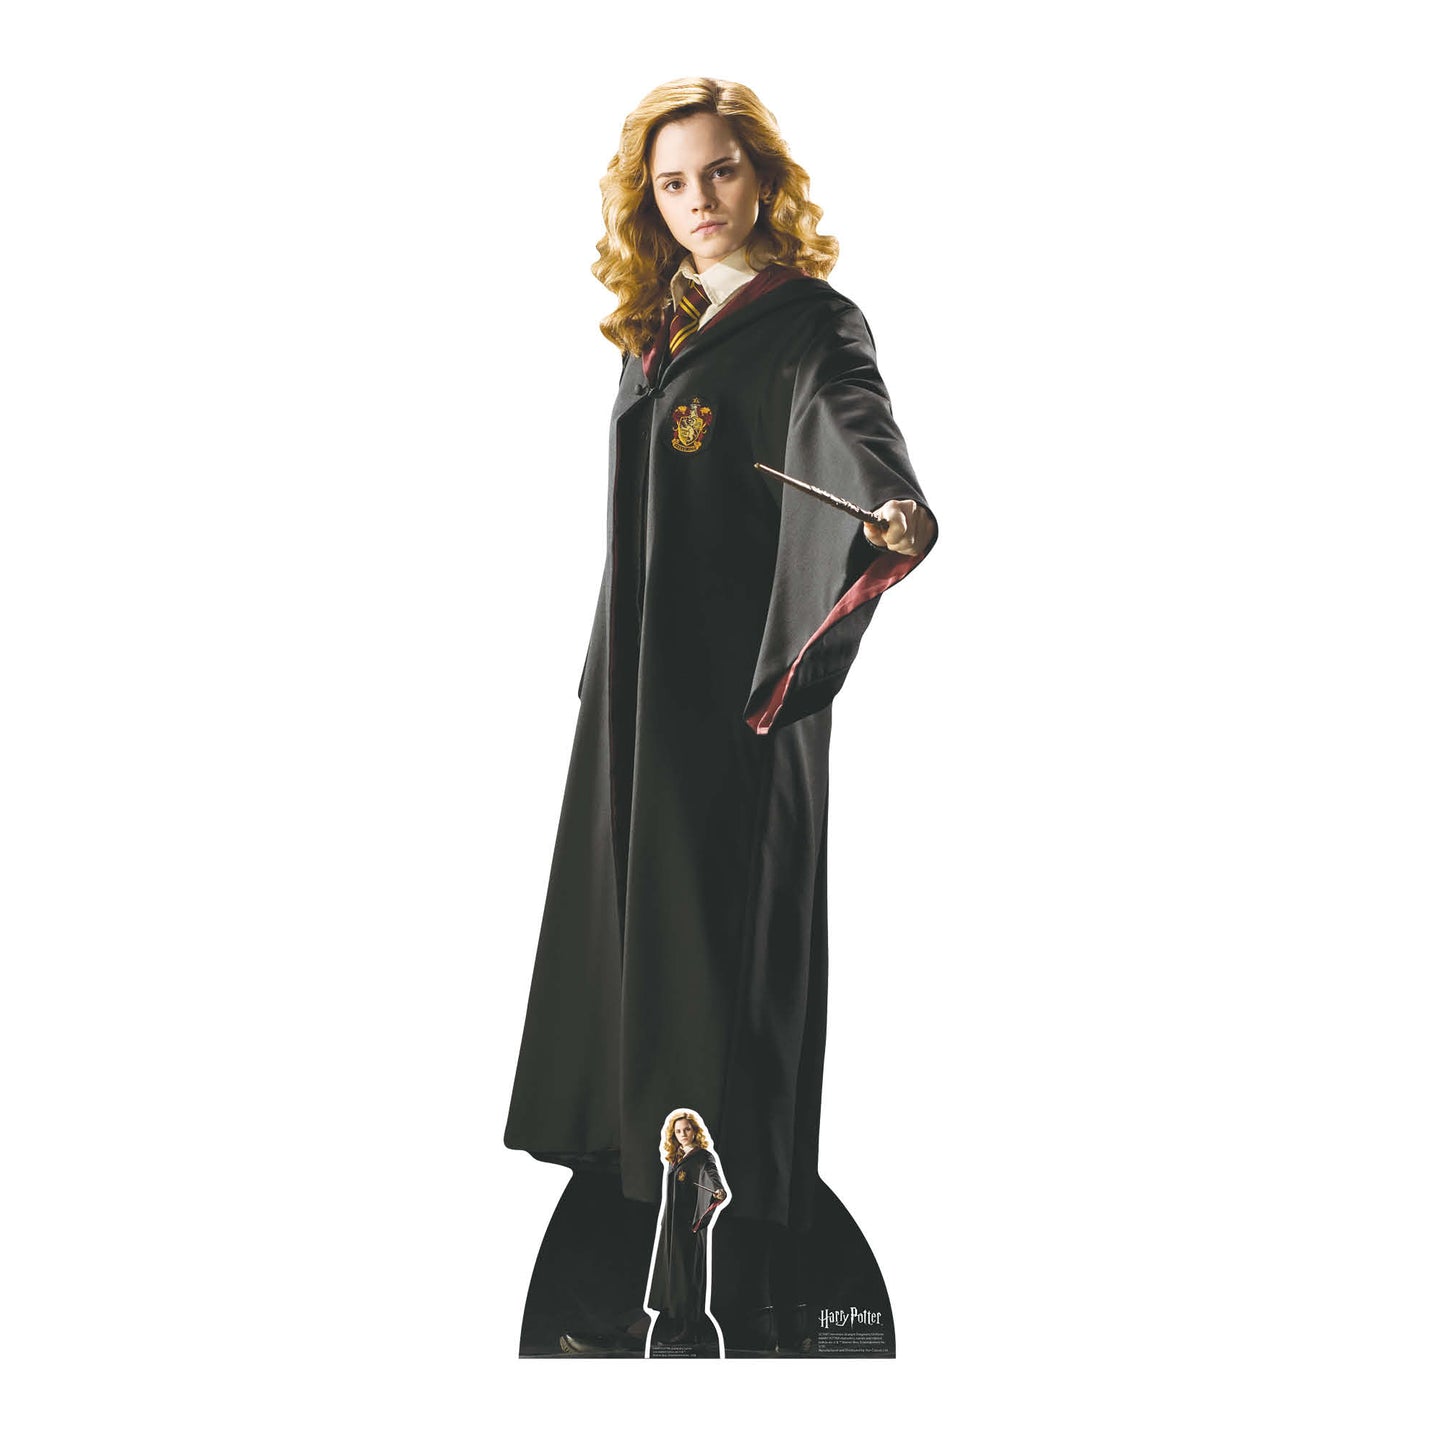 Hermione Granger Hogwarts School of Witchcraft and Wizardry Uniform Cardboard Cutout Lifesize